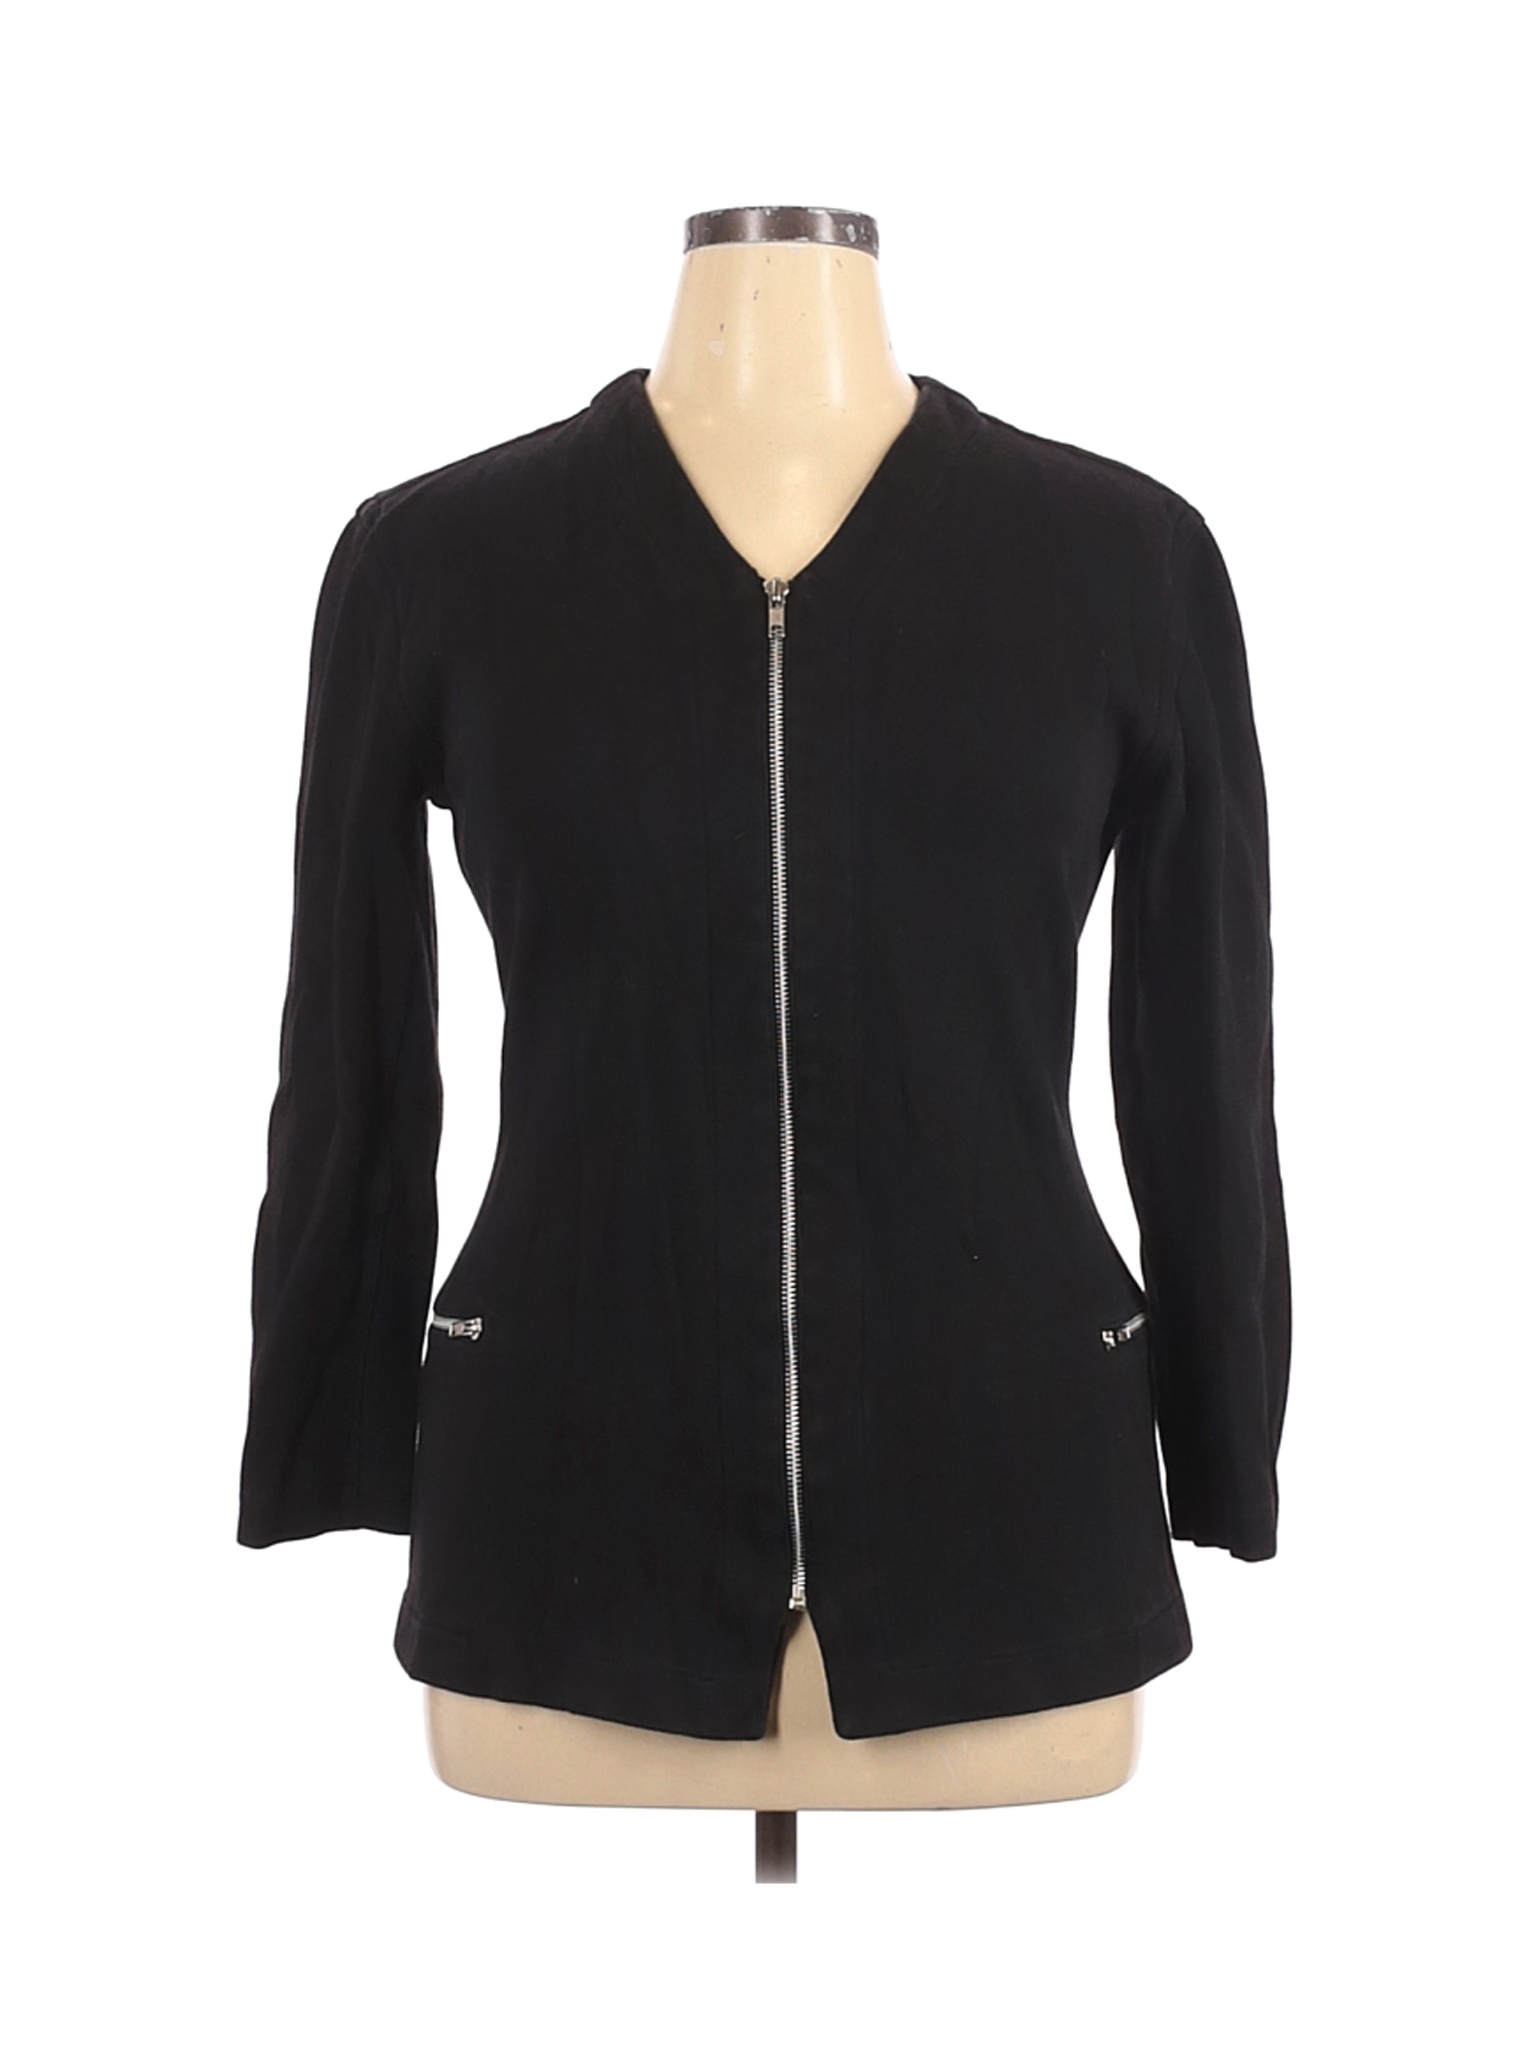 Adrienne Vittadini Women Black Jacket L | eBay